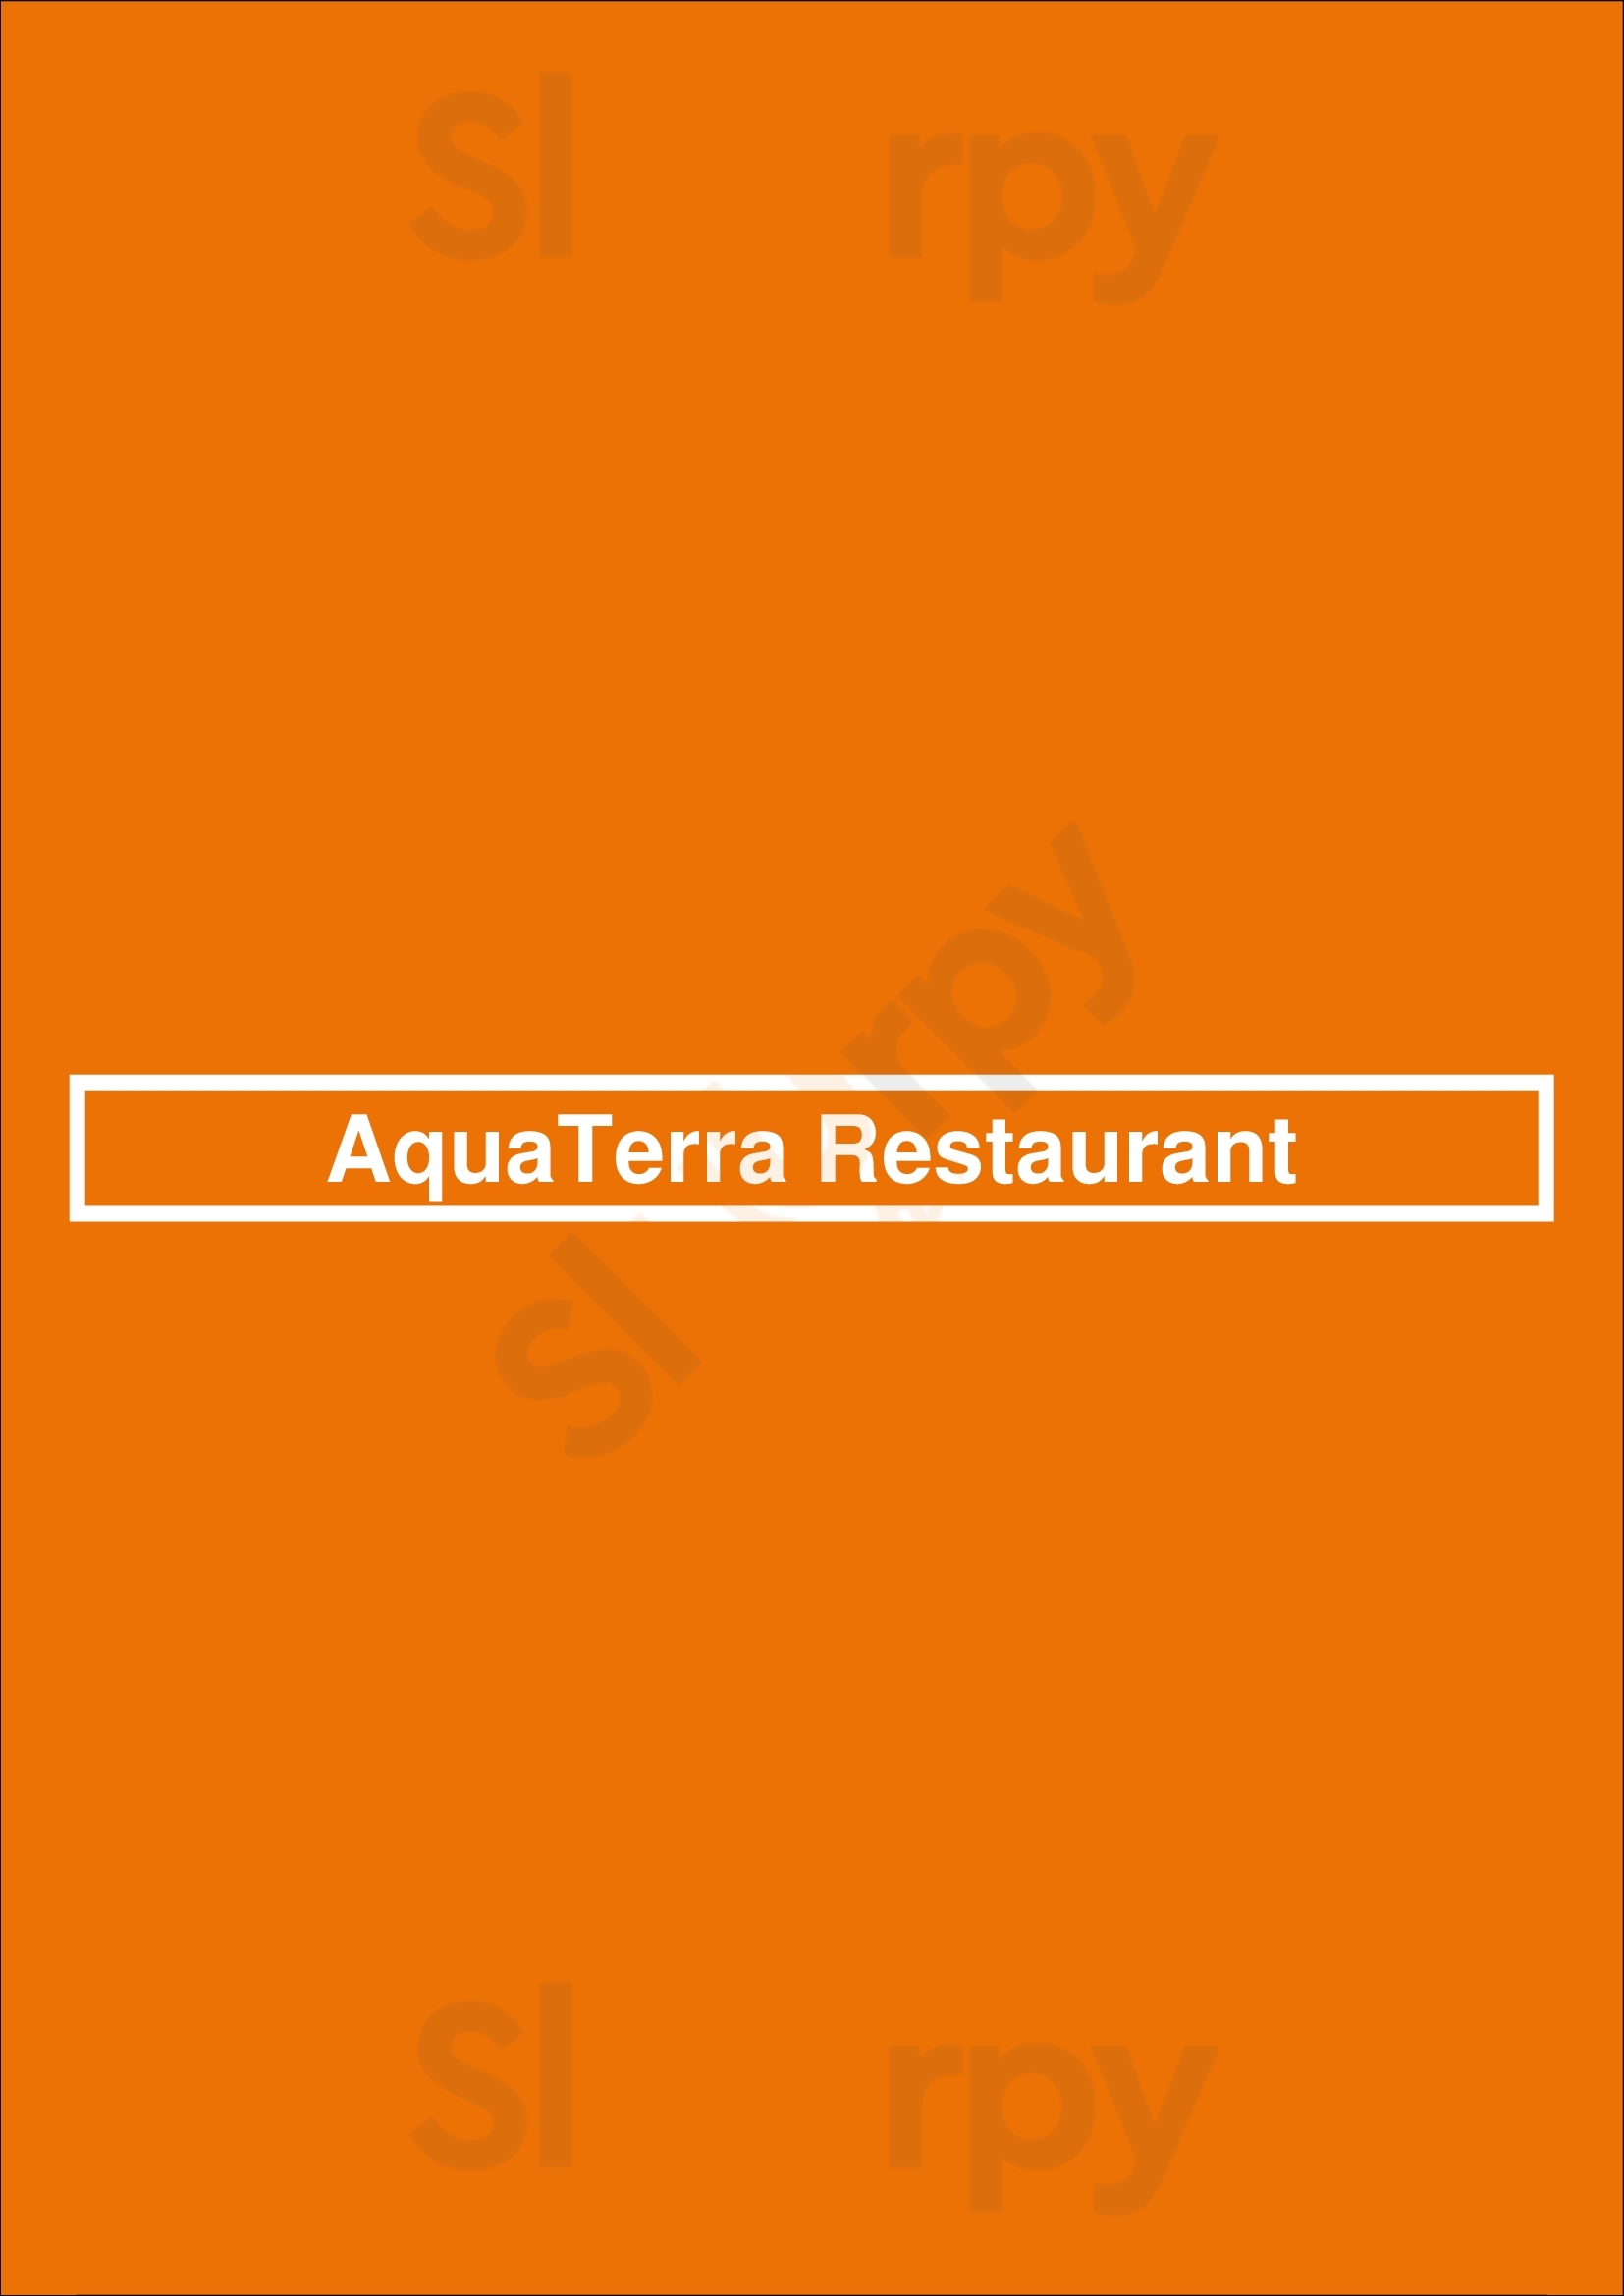 Aquaterra Restaurant Kingston Menu - 1